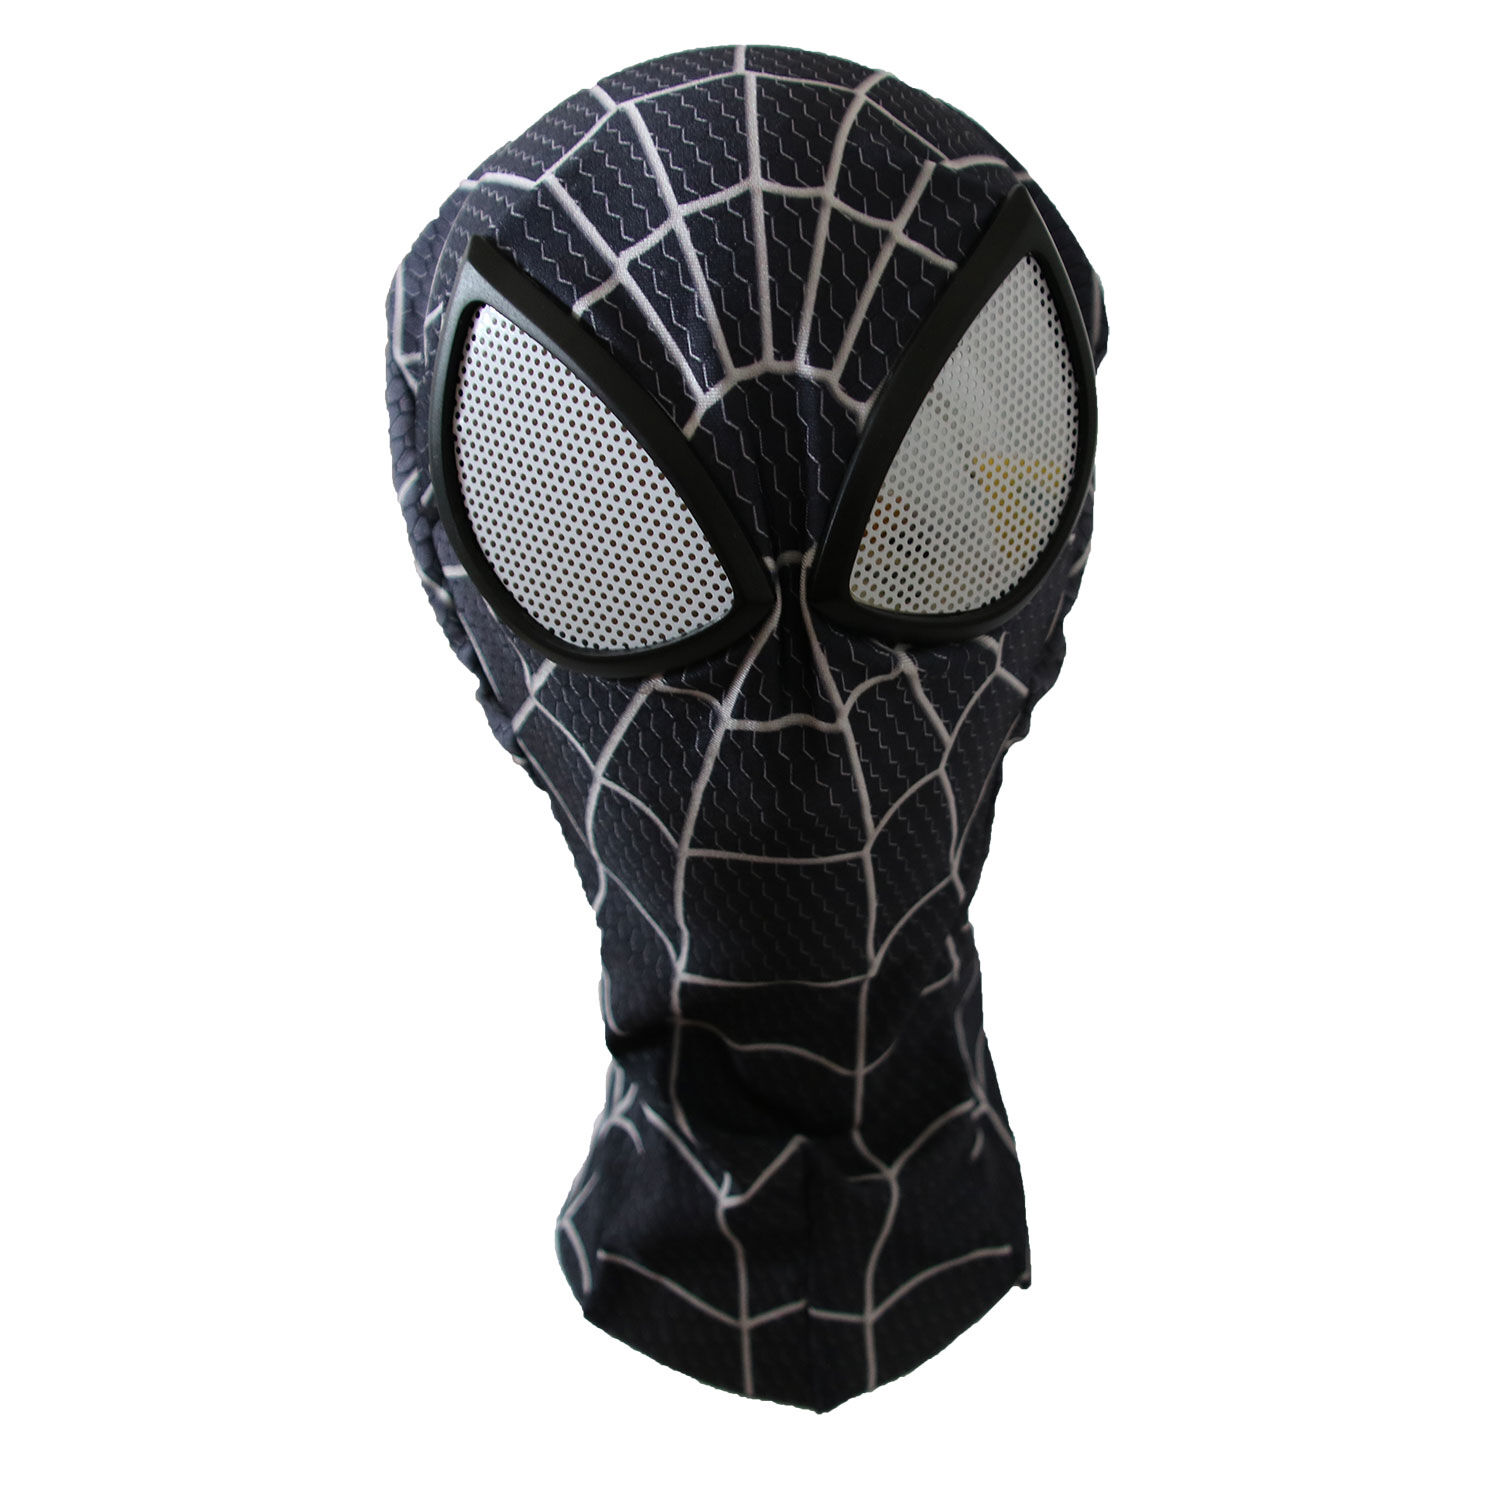 Man Spider-man Venom Mask with Lenses Adult Halloween Party Accessory Venom